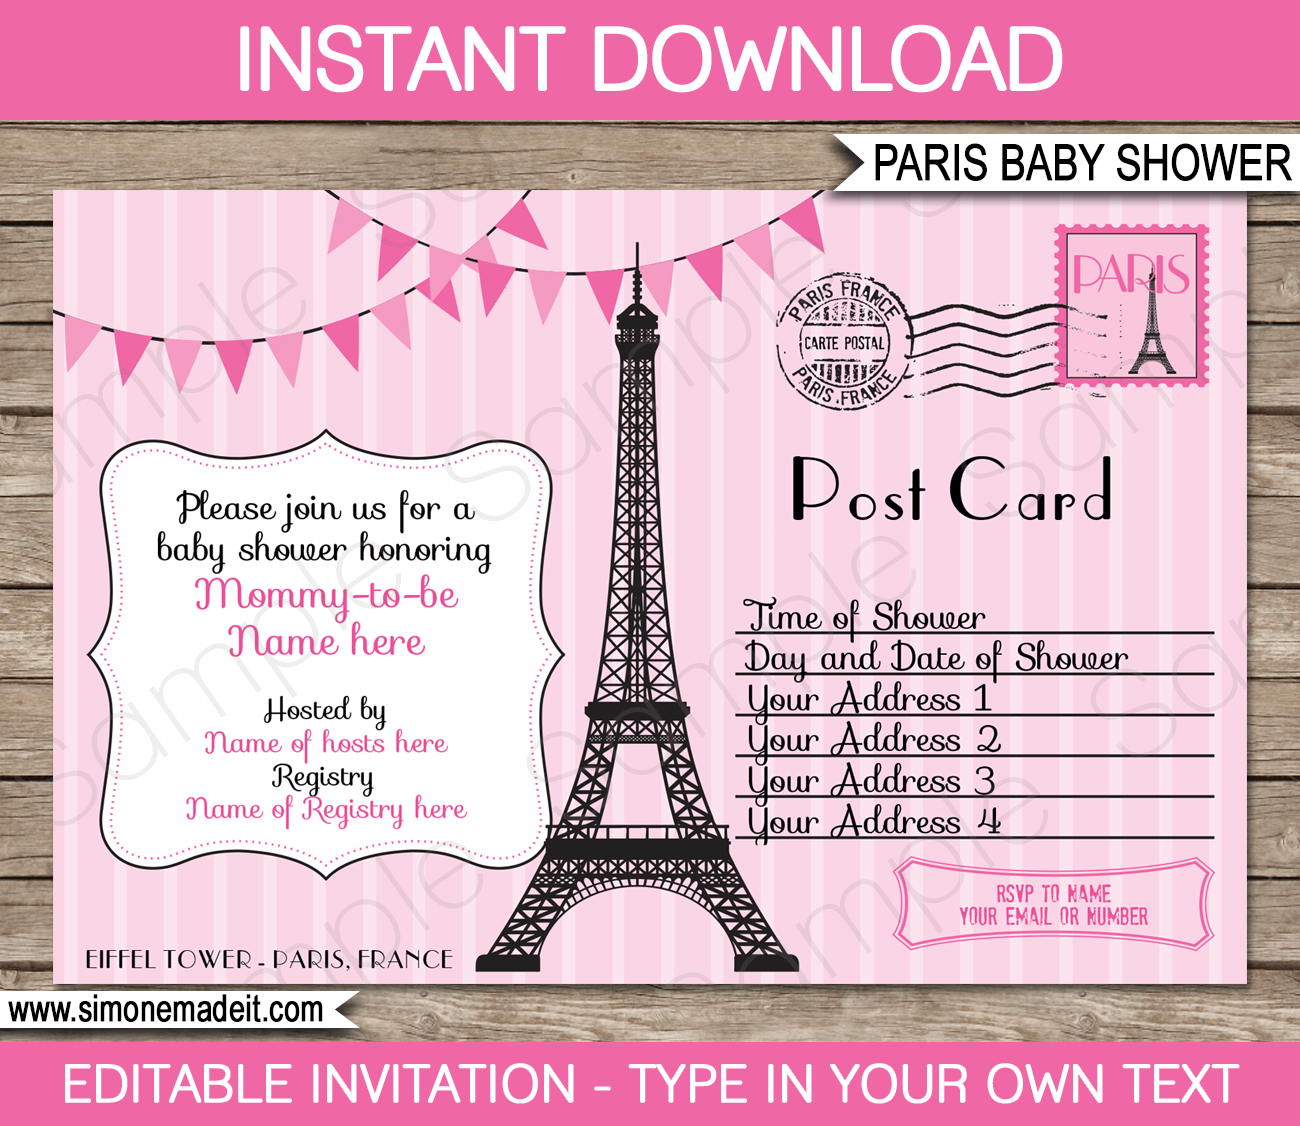 Paris Baby Shower Invitations | Pink Girl | Editable DIY Theme Template | INSTANT DOWNLOAD $7.50 via SIMONEmadeit.com